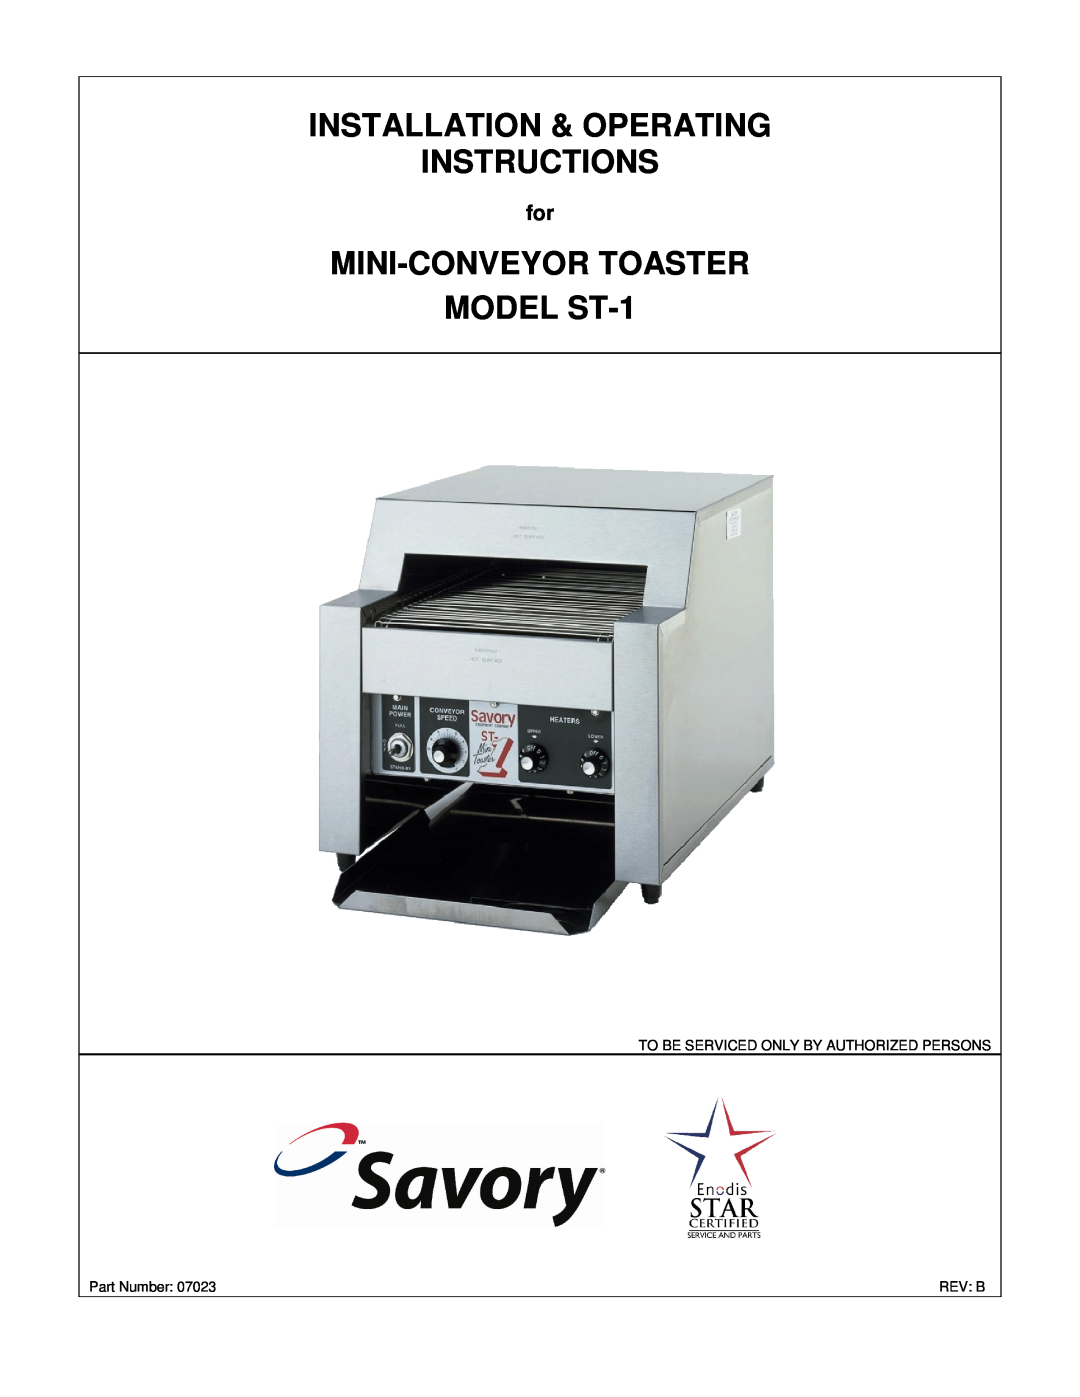 Merco Savory manual Installation & Operating Instructions, MINI-CONVEYORTOASTER MODEL ST-1 